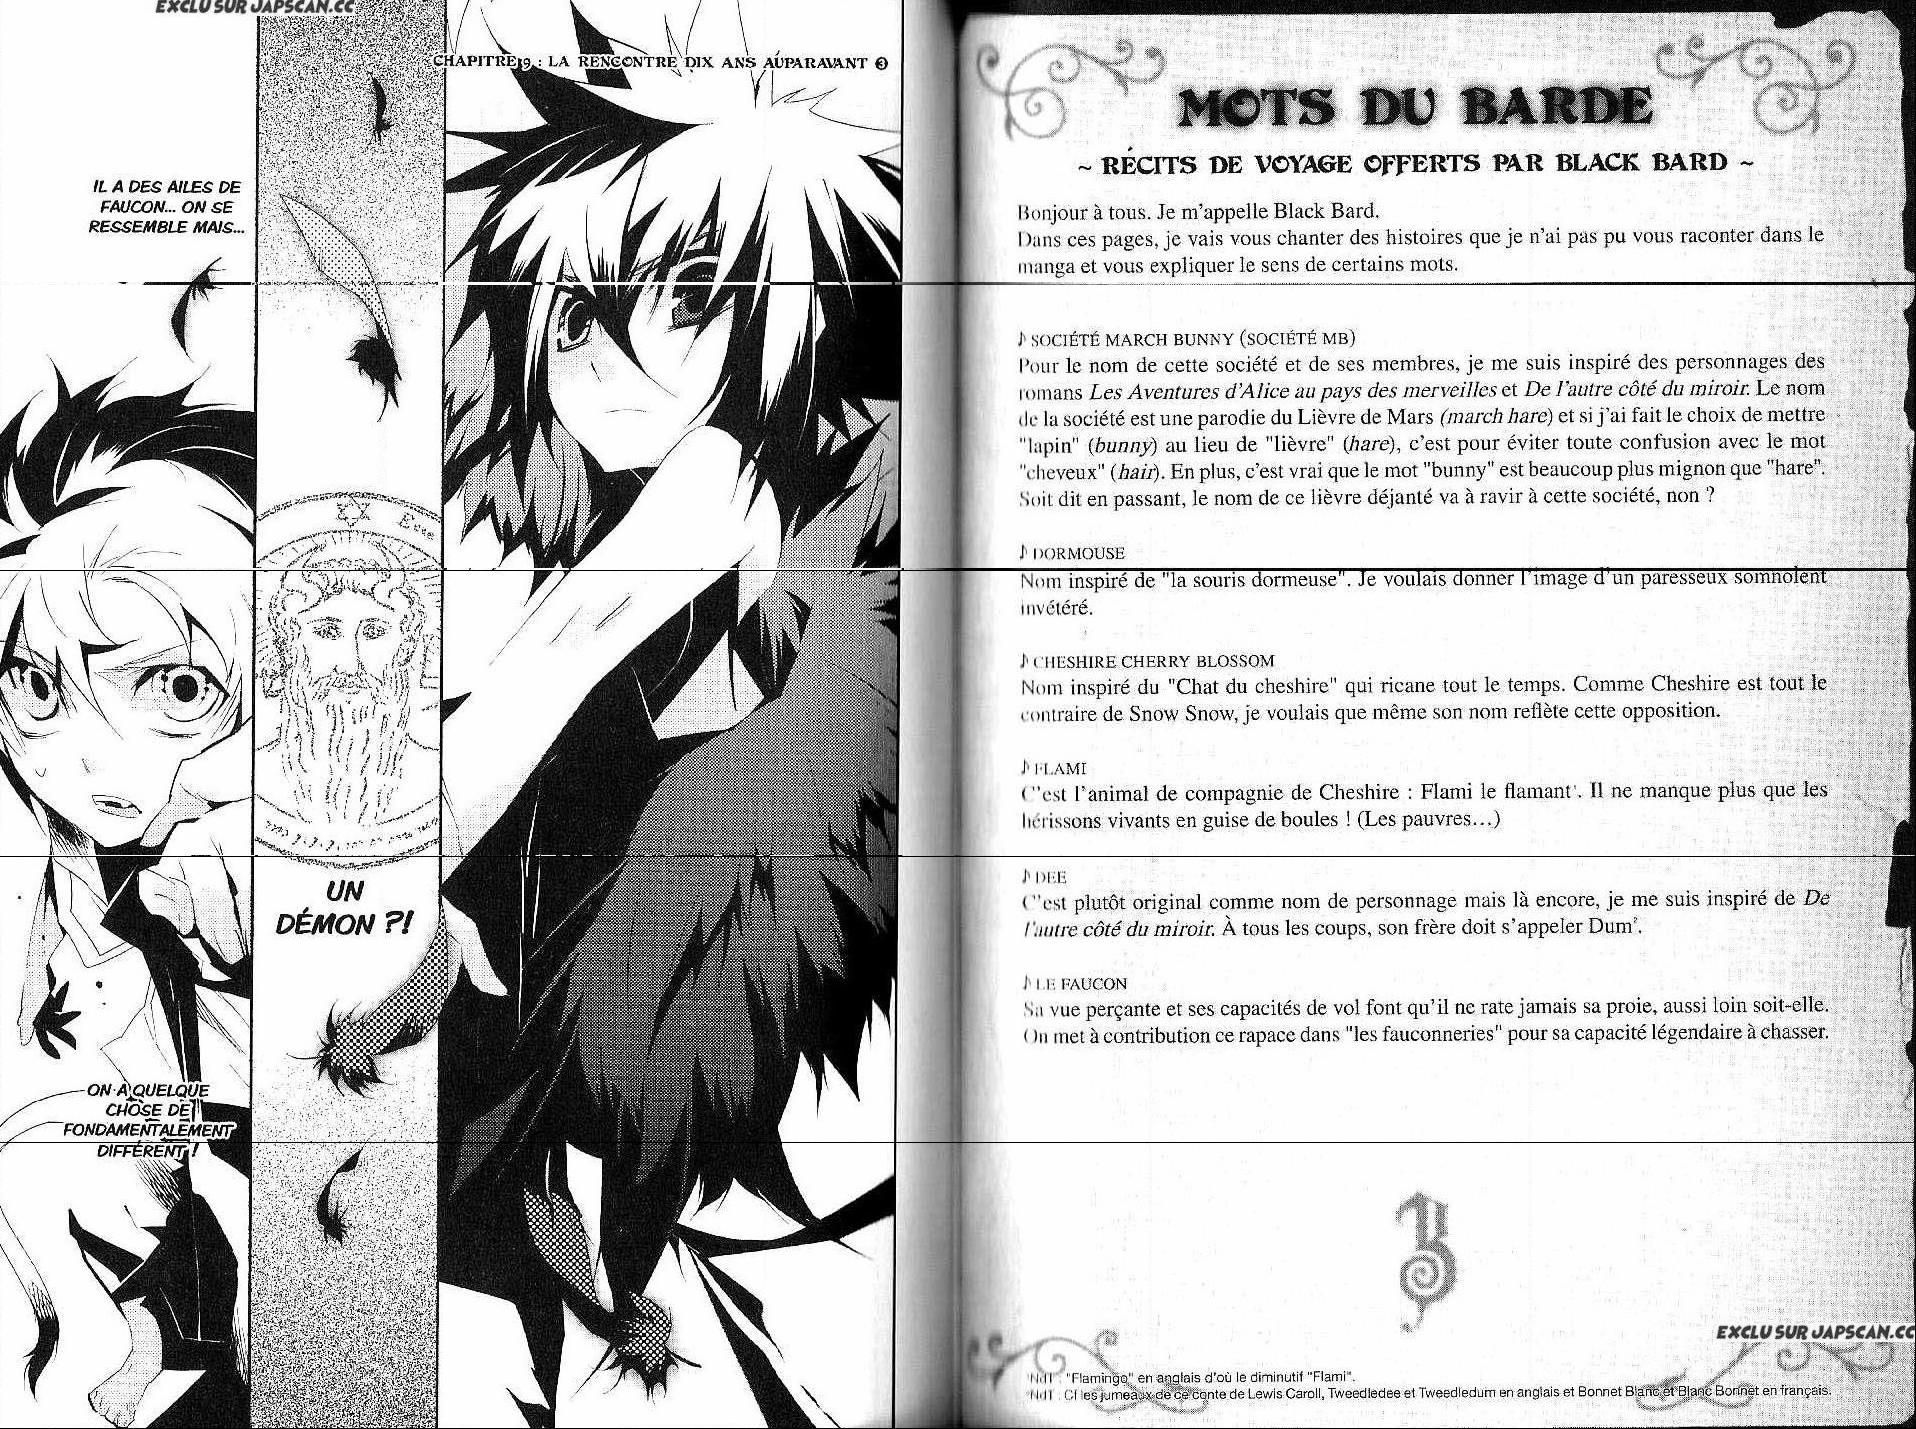 Black Bard - Le Ménestrel: Chapter 9 - Page 1